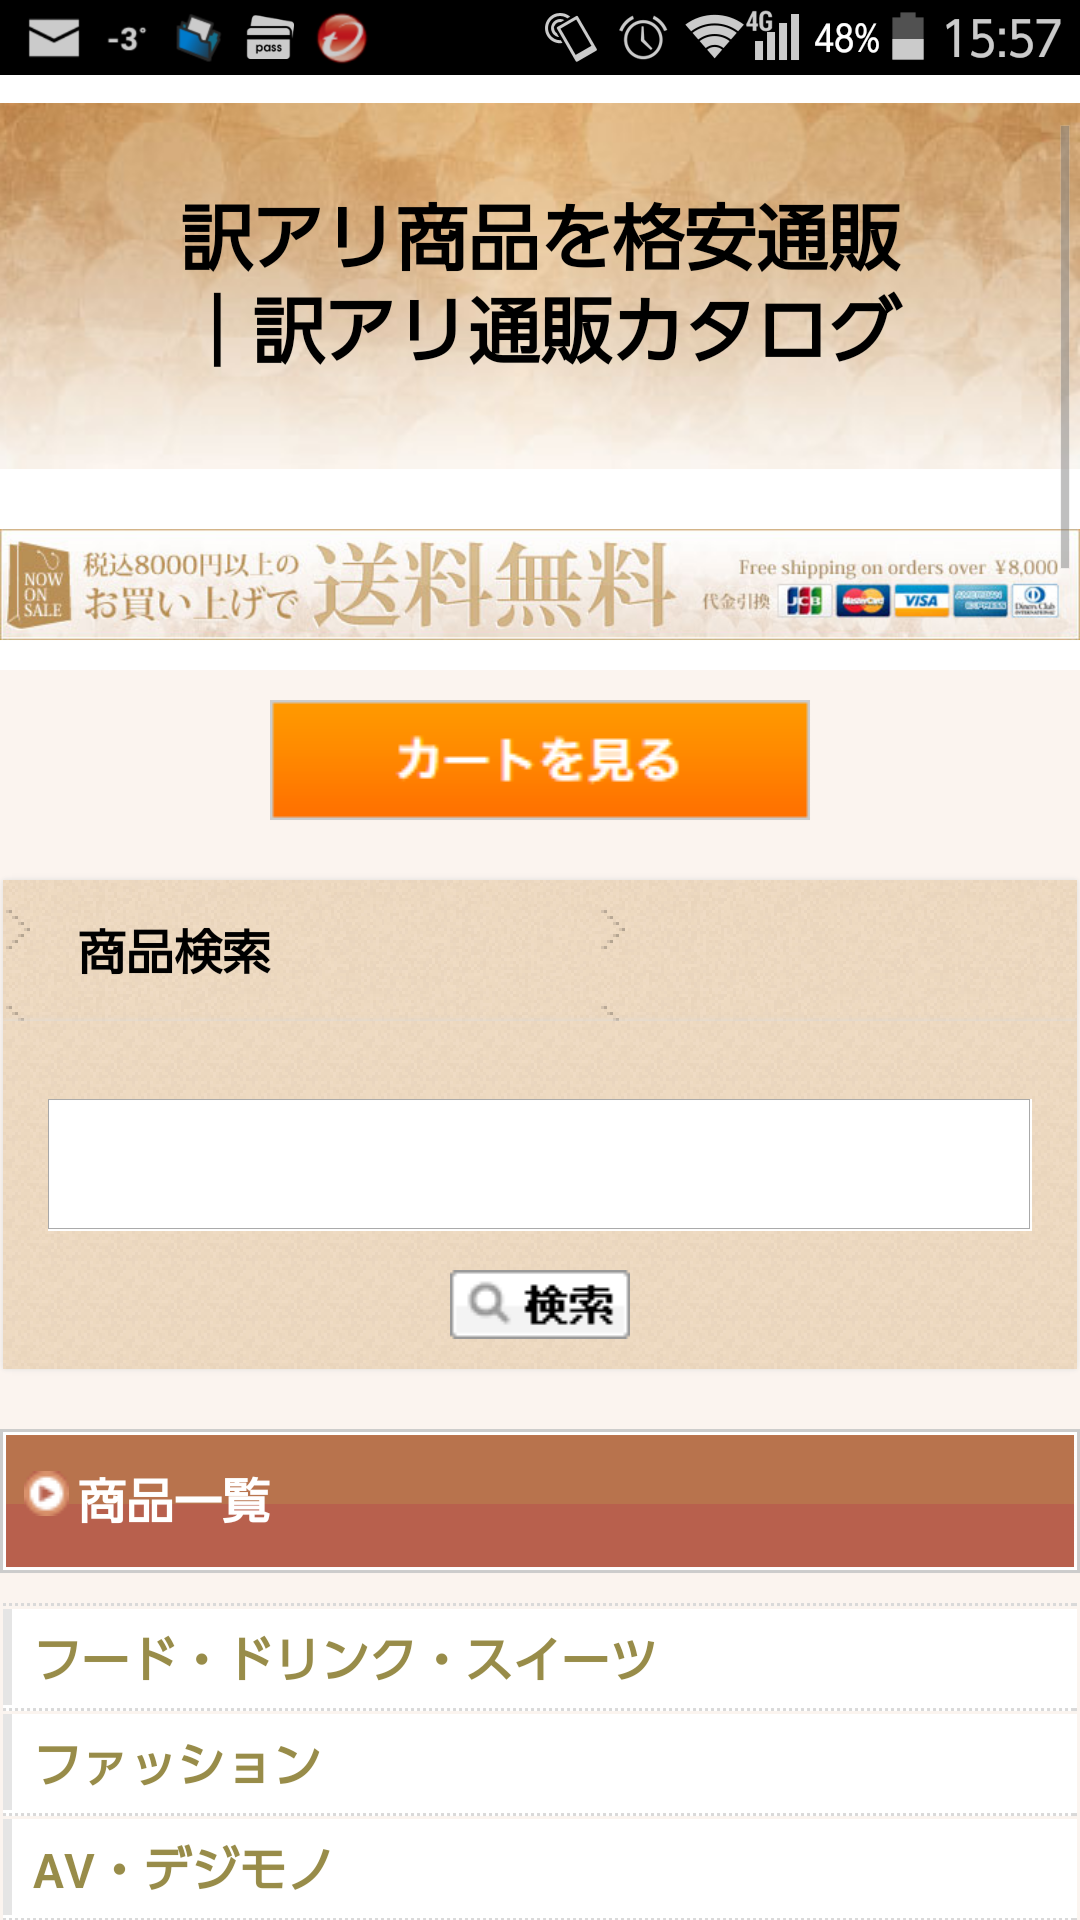 Android application 訳アリ通販カタログ screenshort